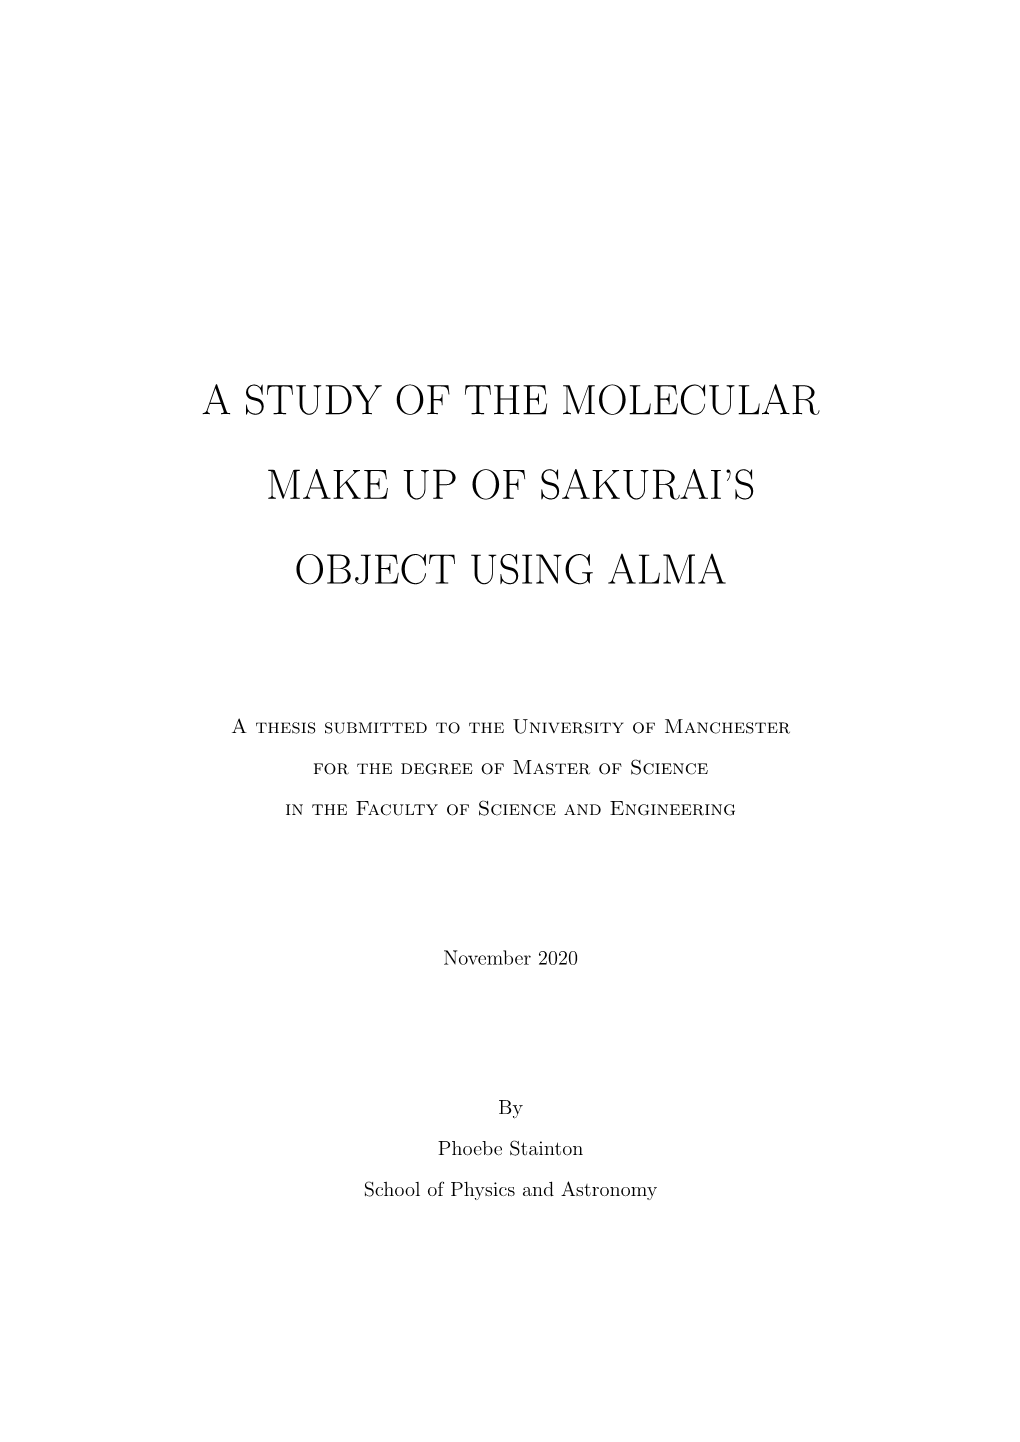 A Study of the Molecular Make up of Sakurai's Object